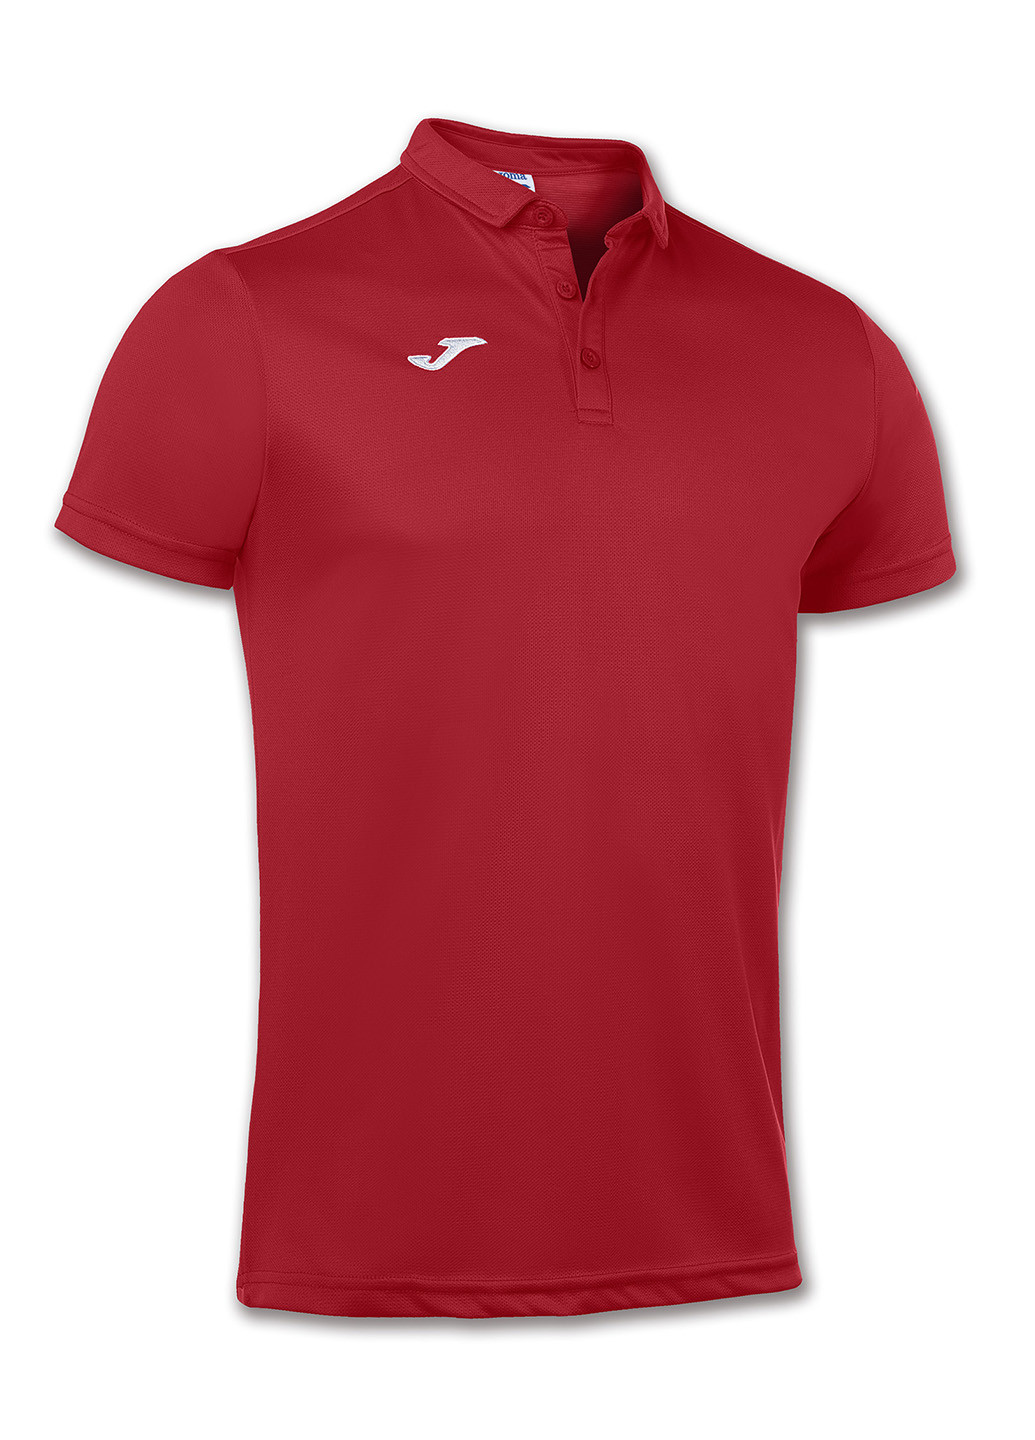 Красная футболка-поло для мужчин Joma с логотипом